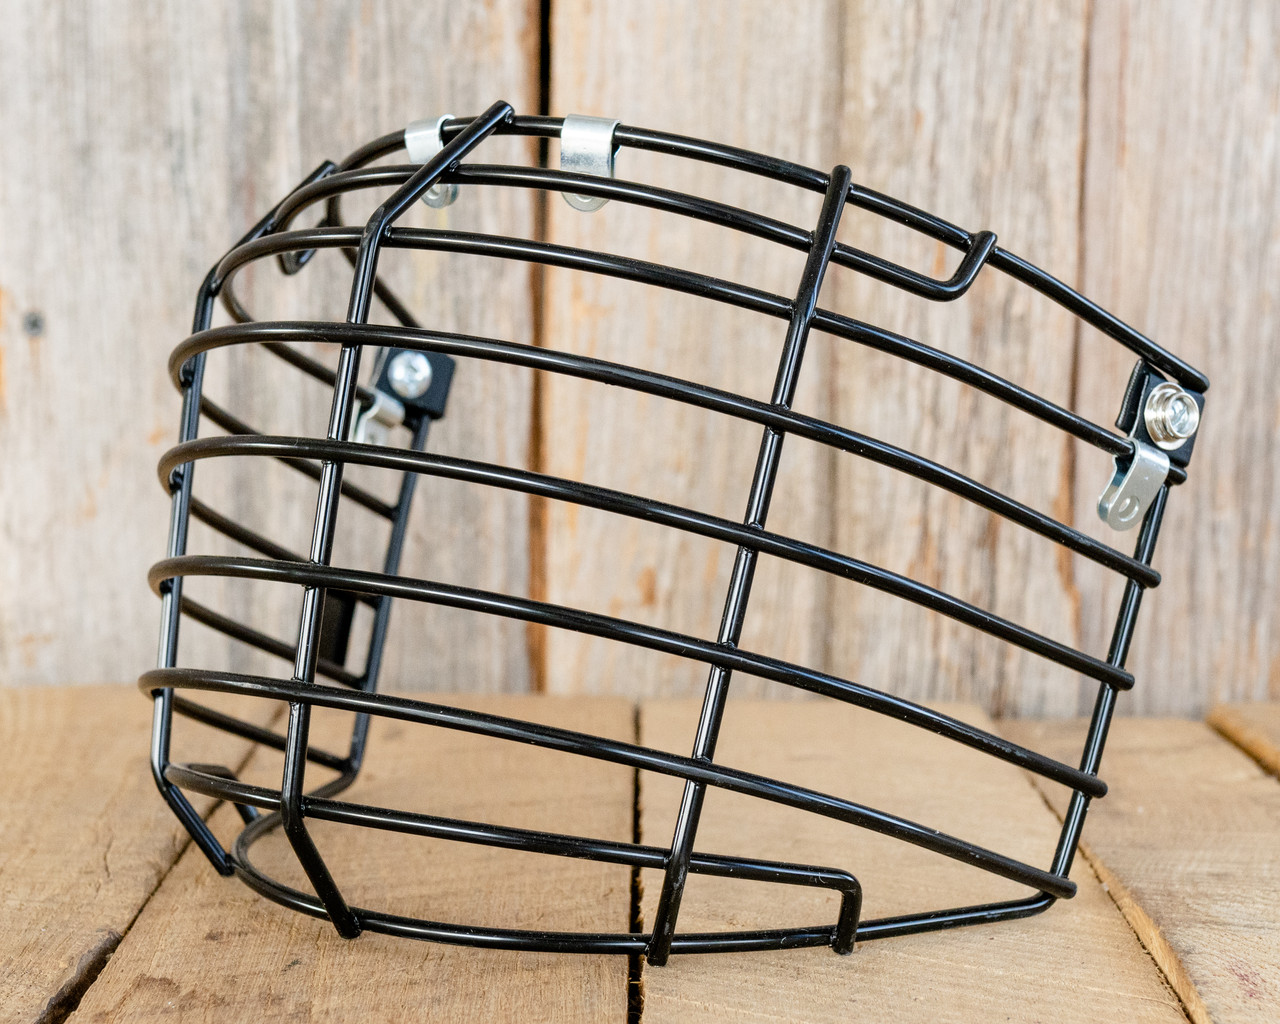 Helmet Replacement Parts - Beastmaster Pro Rodeo Gear